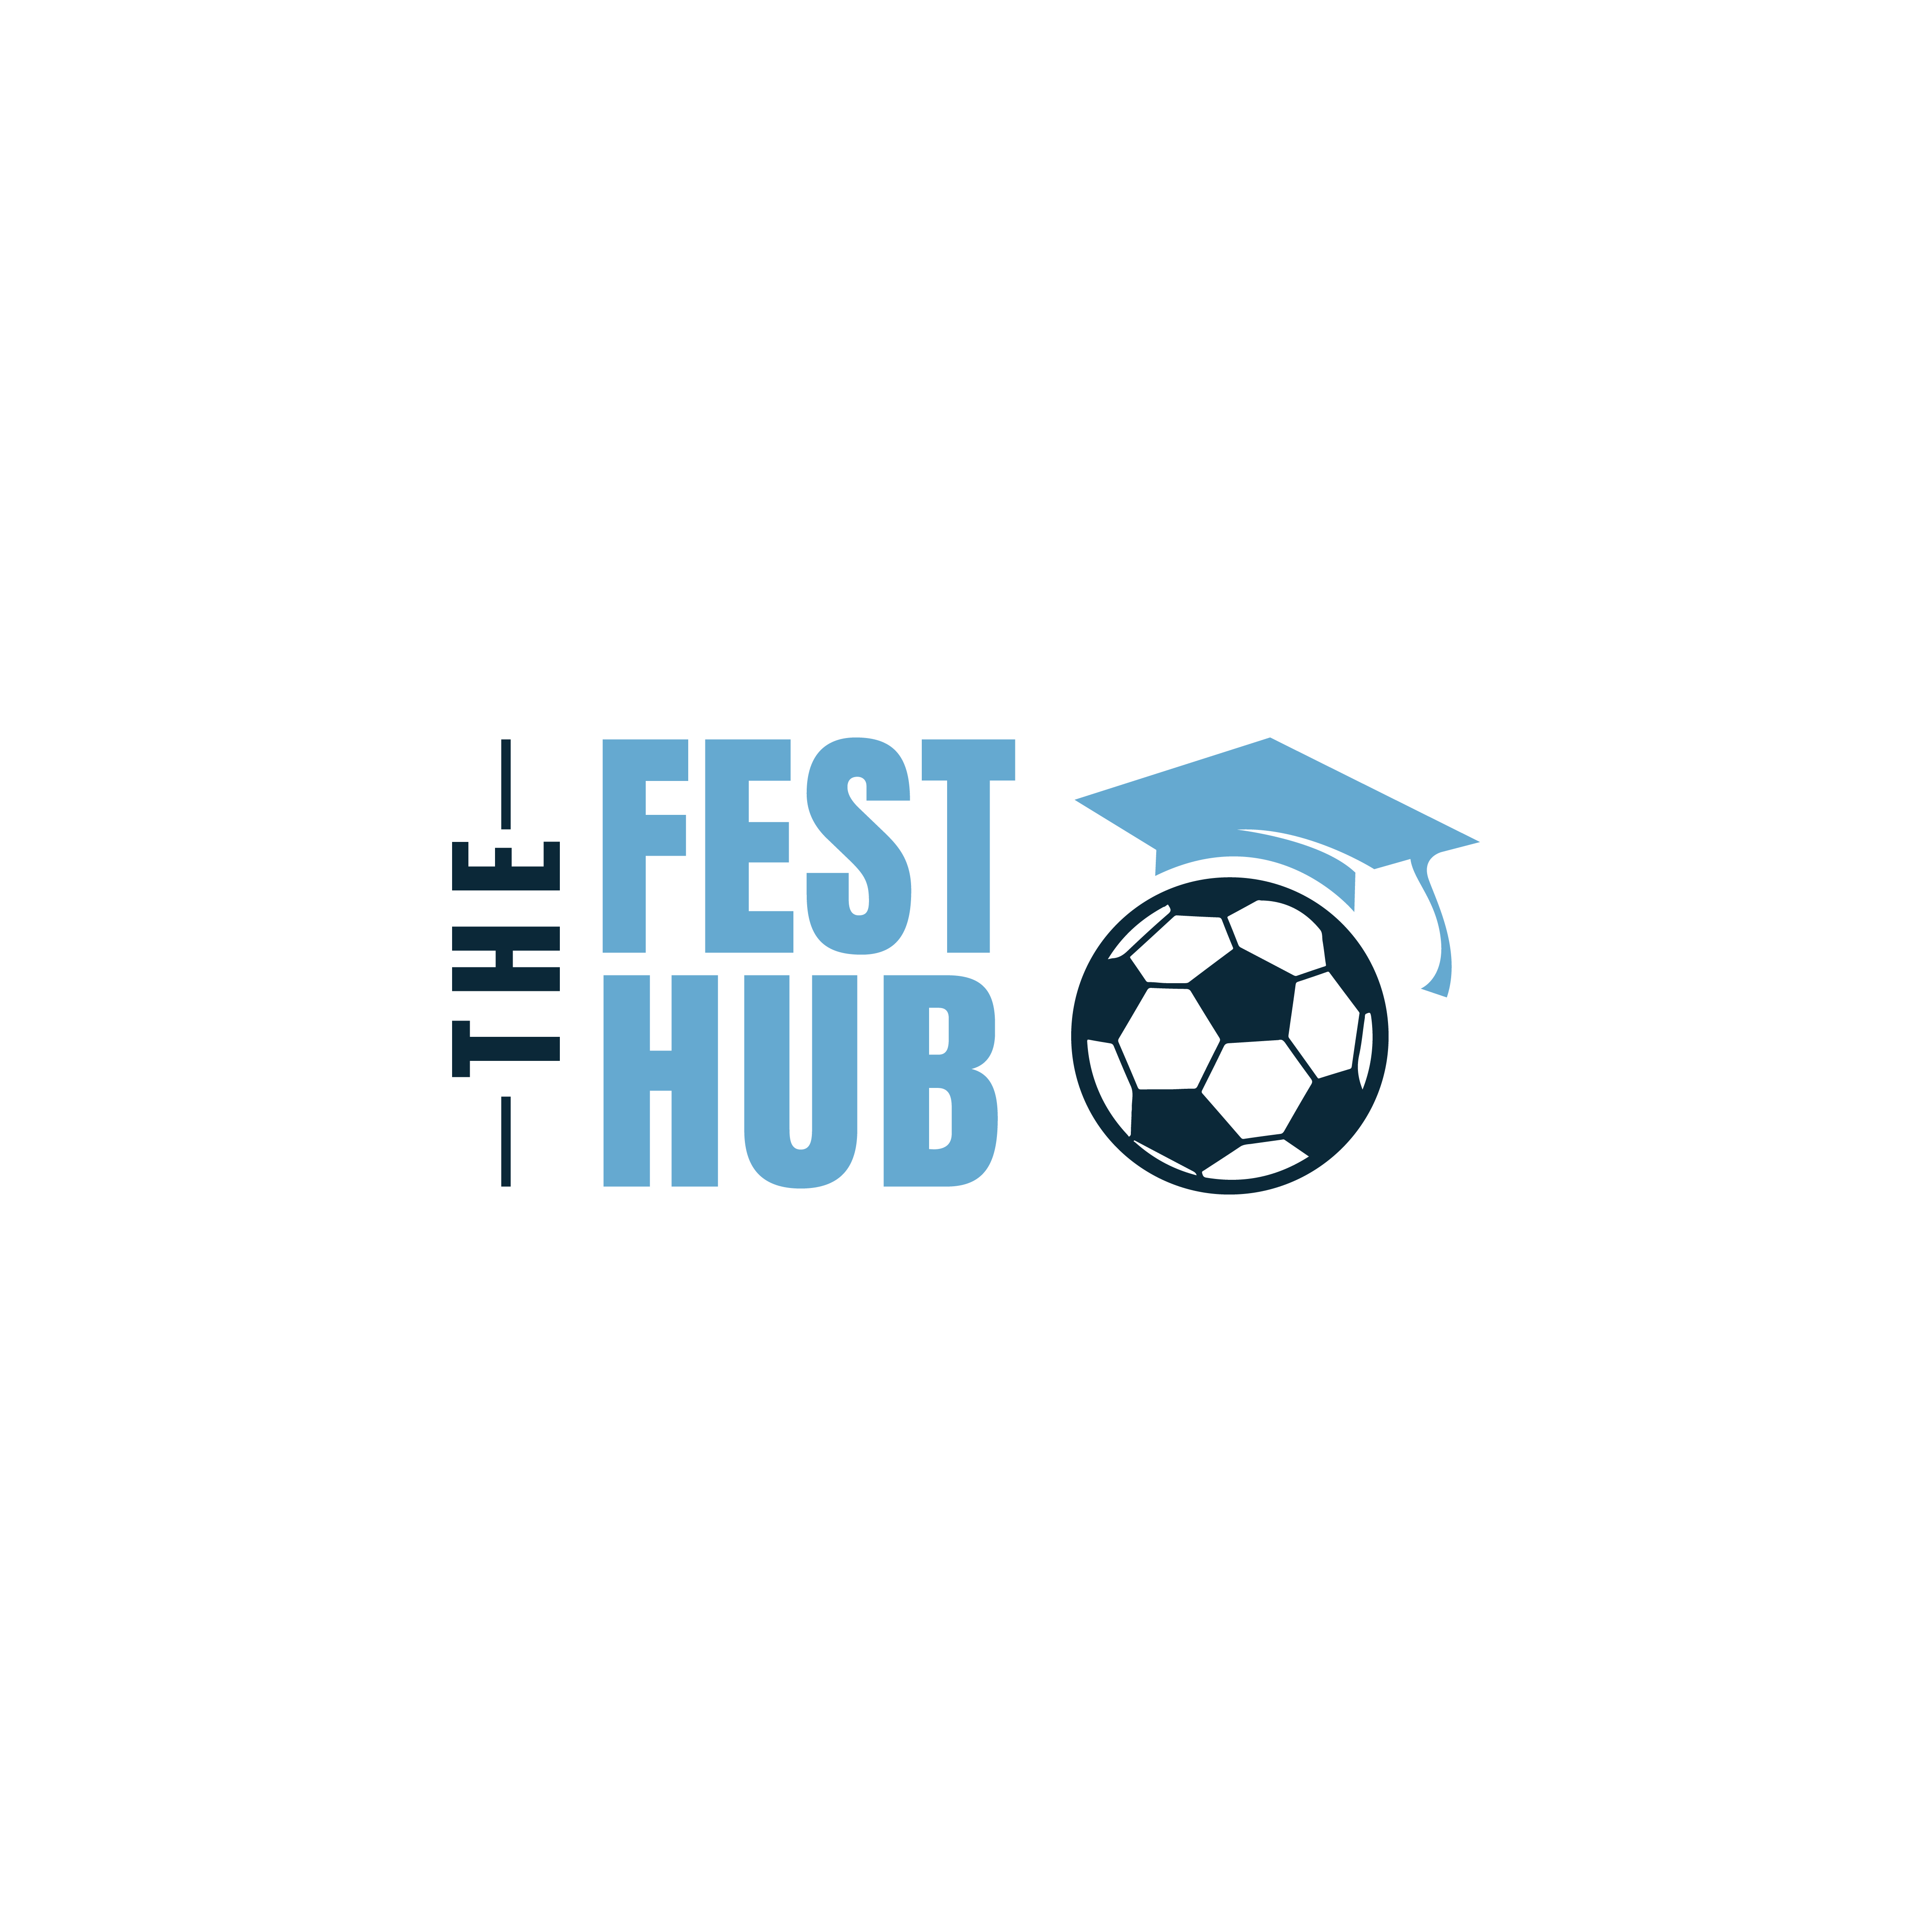 Fest Hub